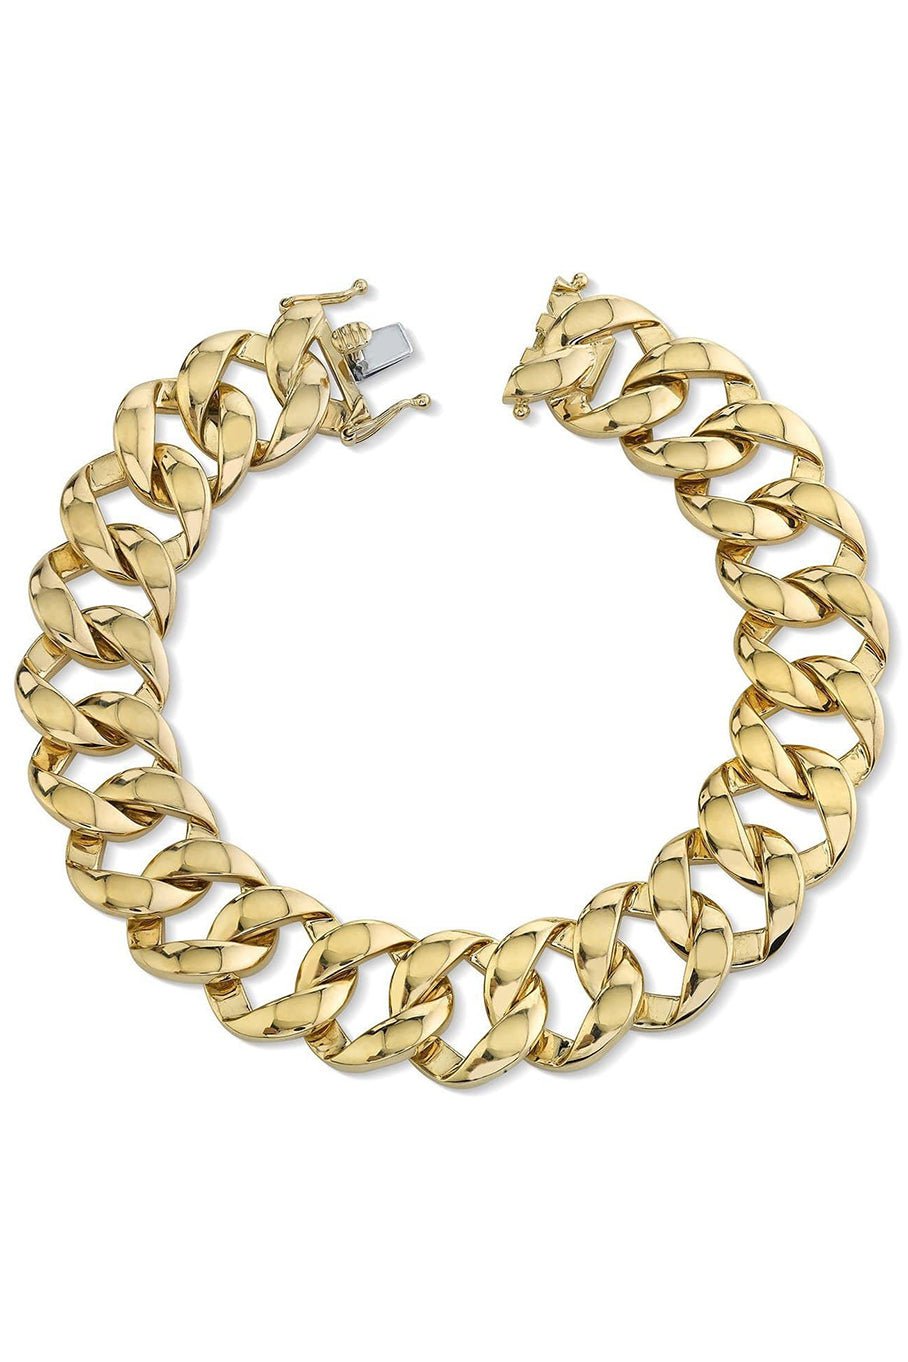 ANITA KO-Hemingway Chain Link Bracelet-YELLOW GOLD